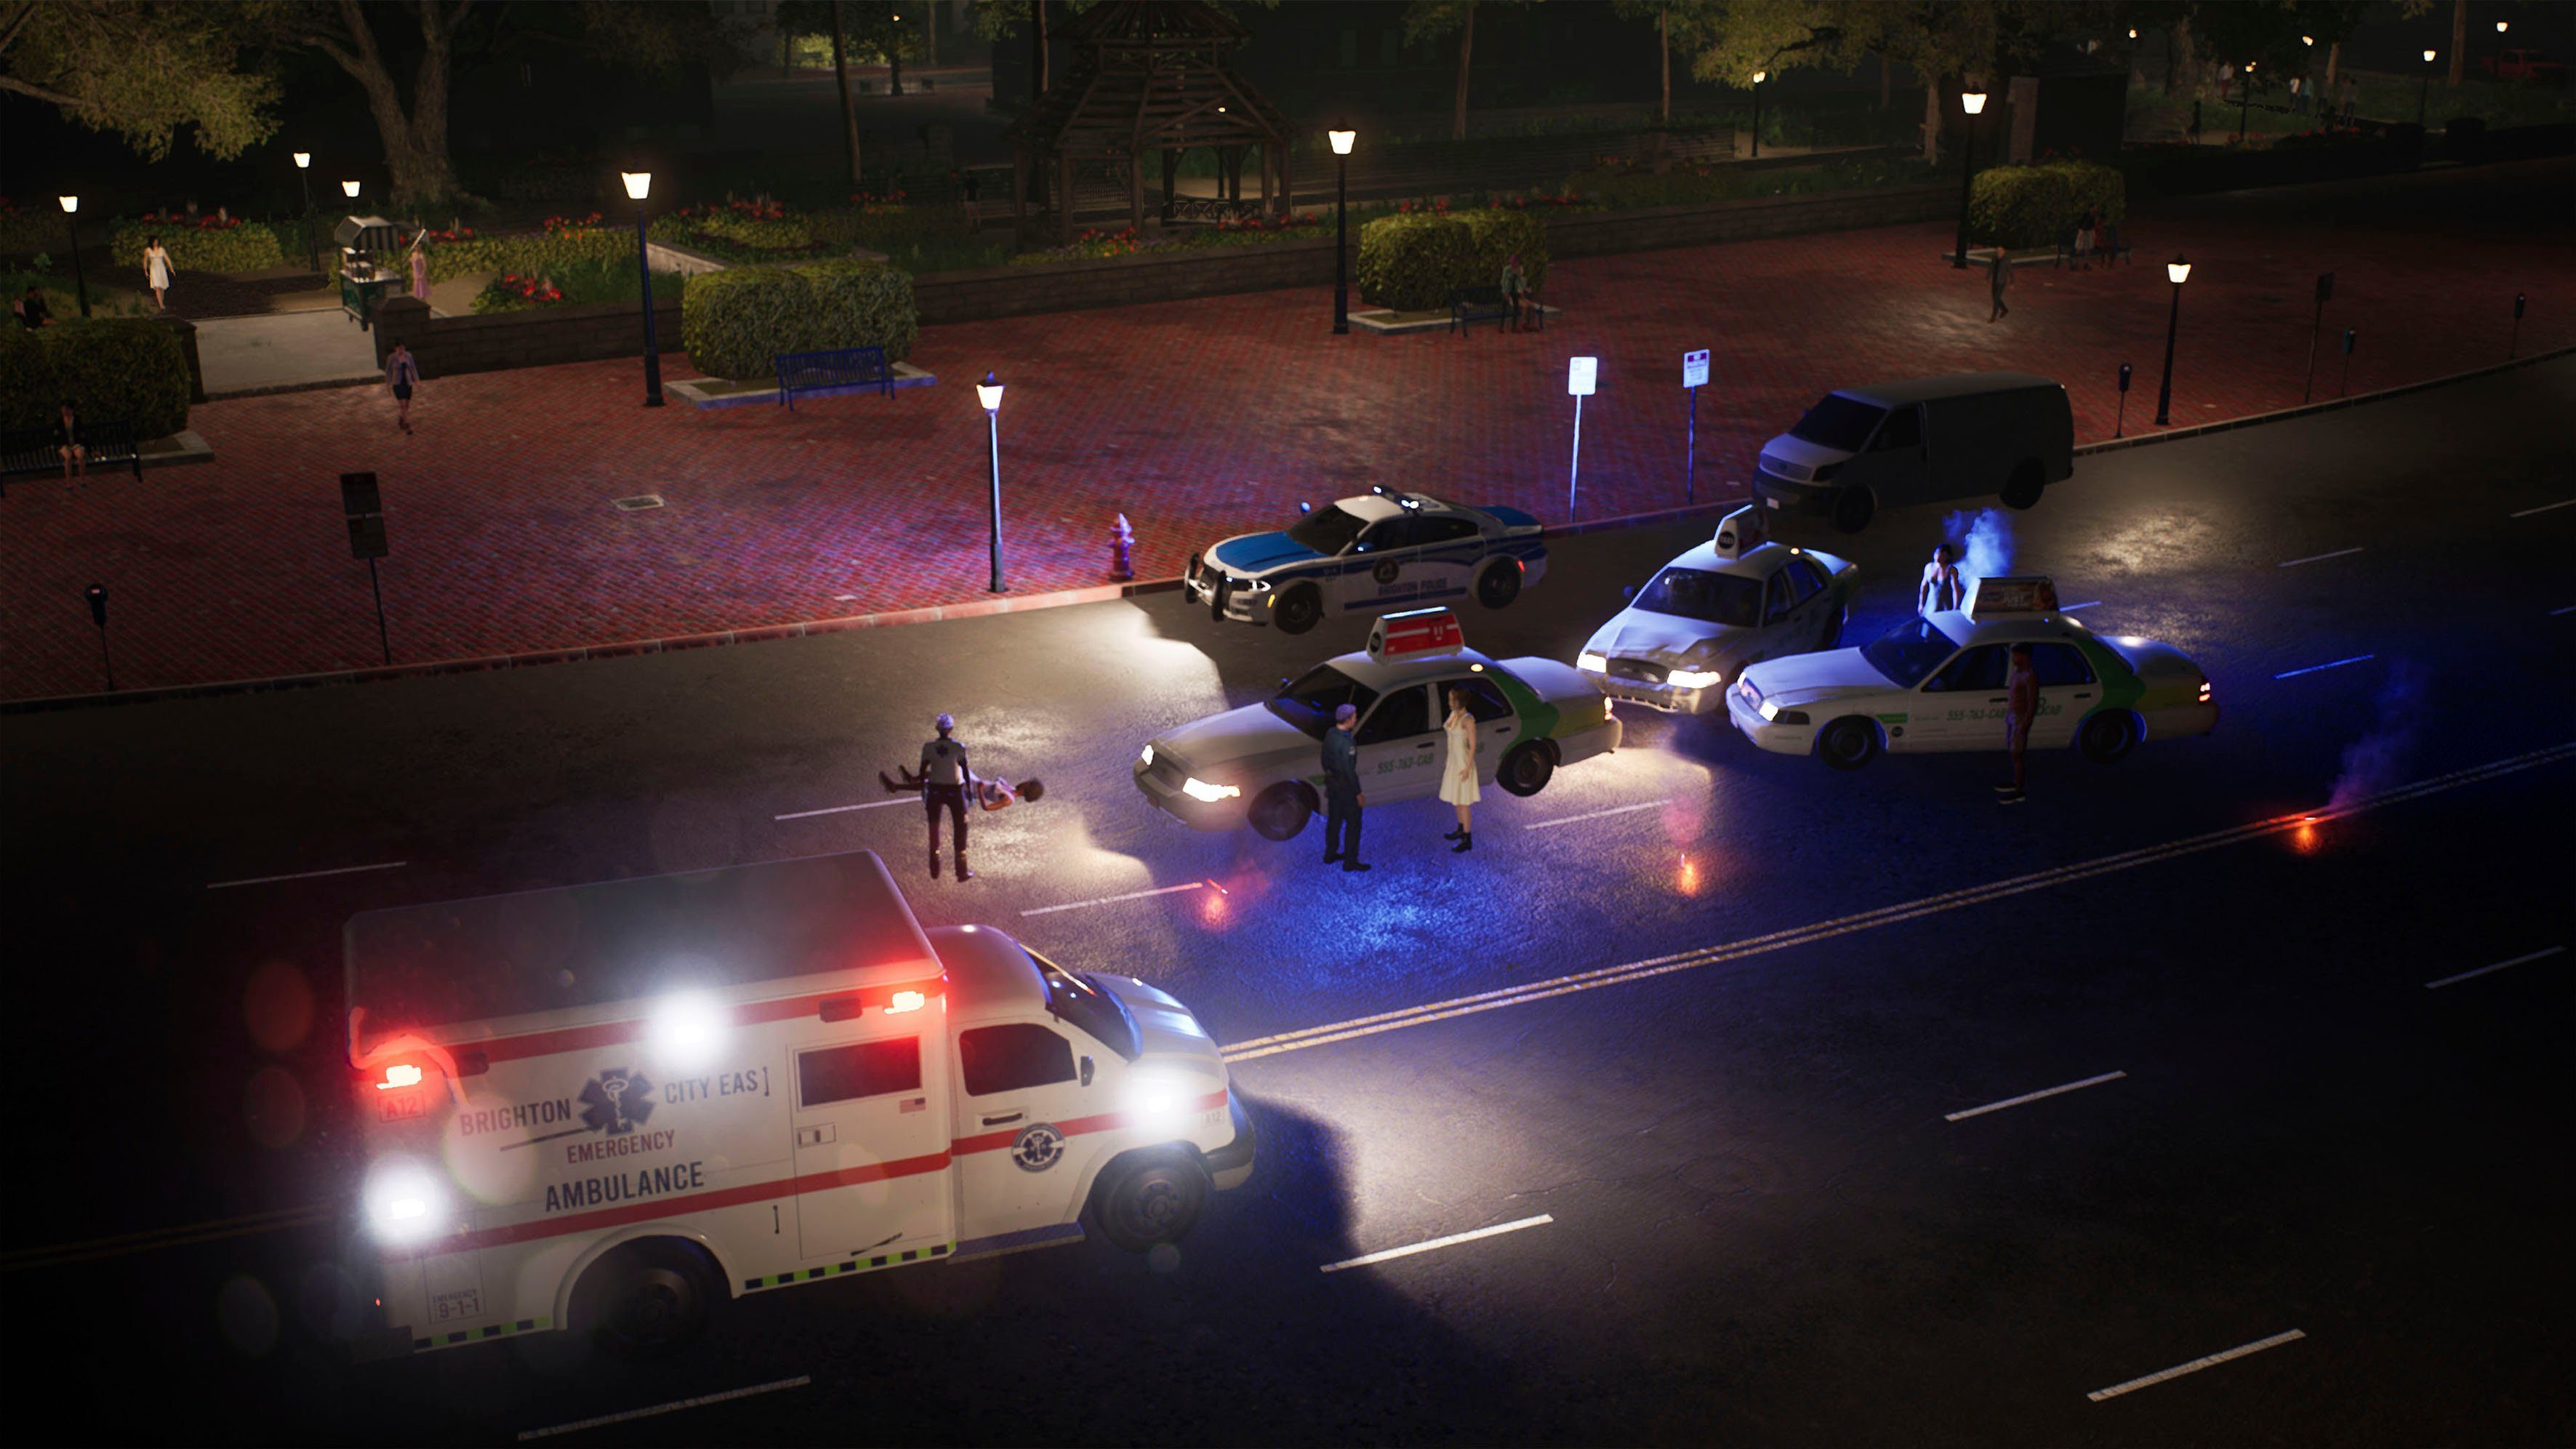 Astragon Police Simulator: Patrol PlayStation Officers 5